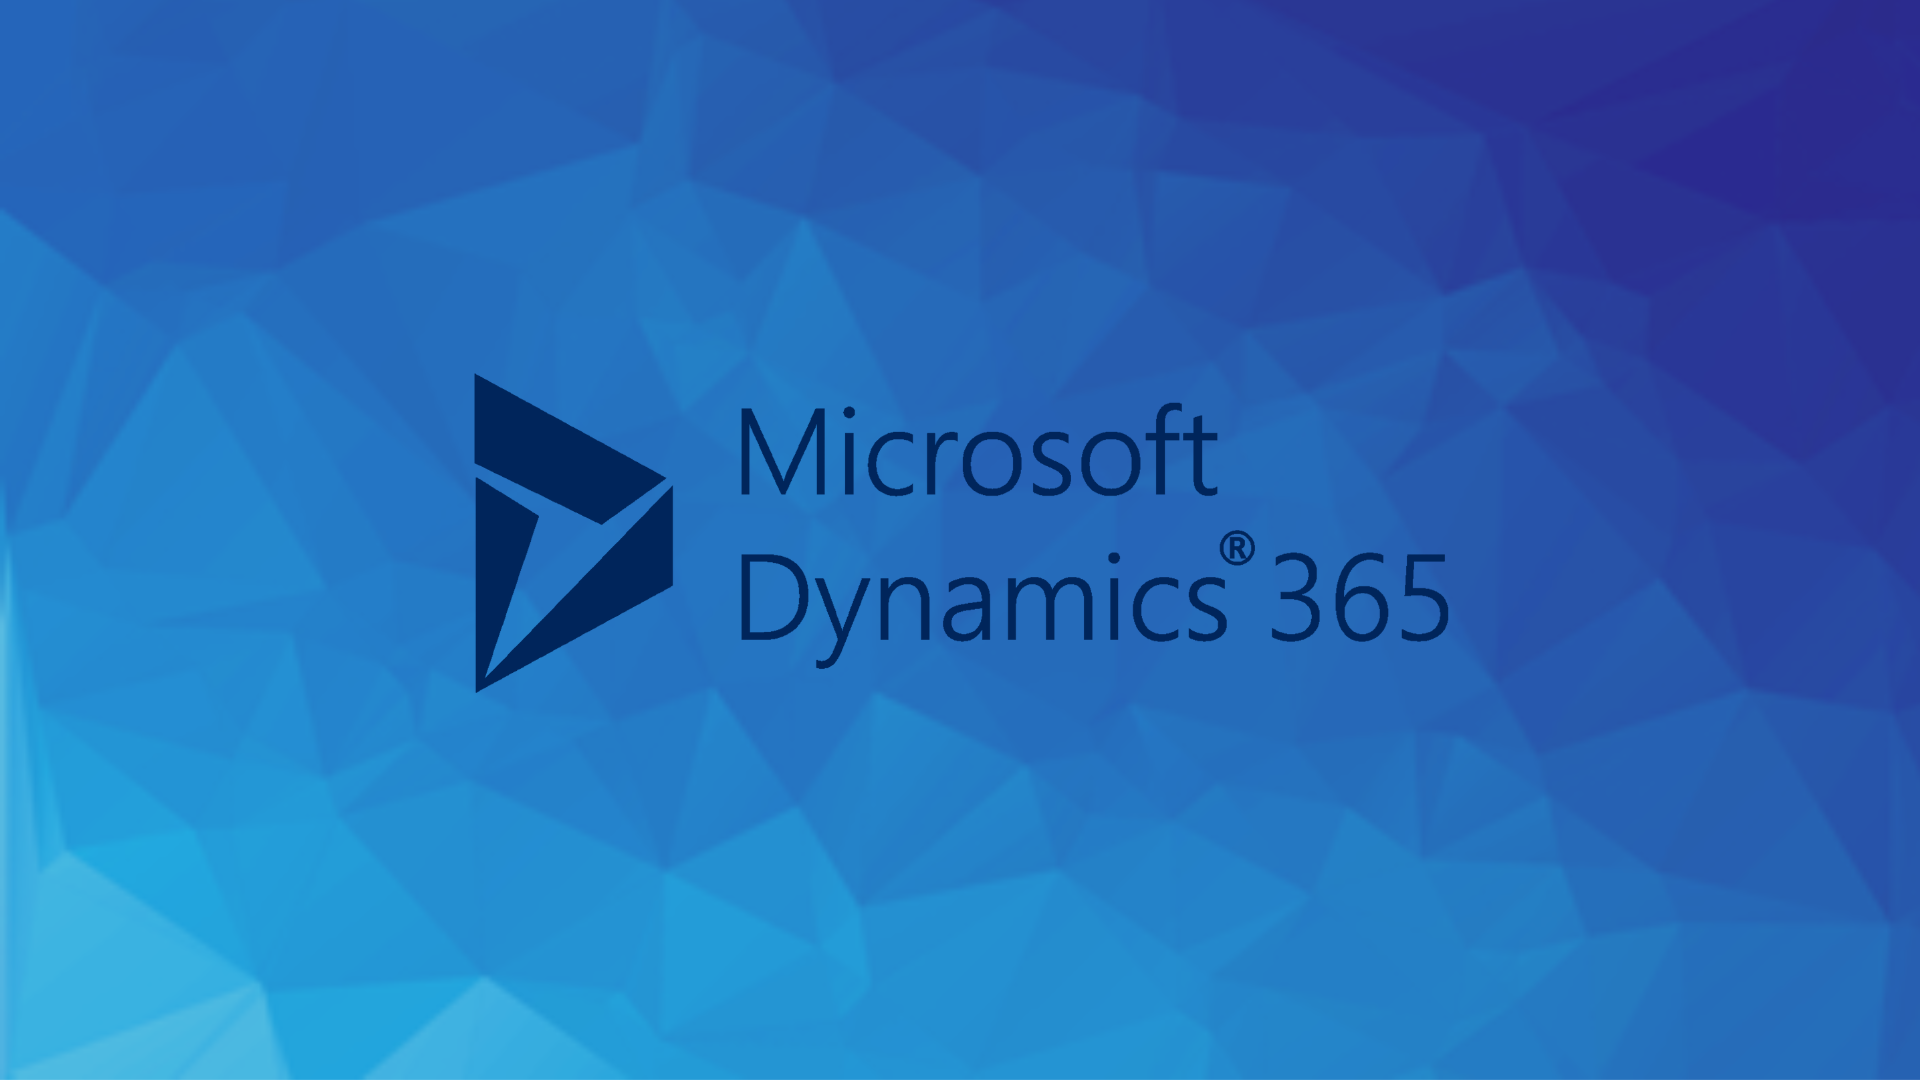 Microsoft Dynamics Integration